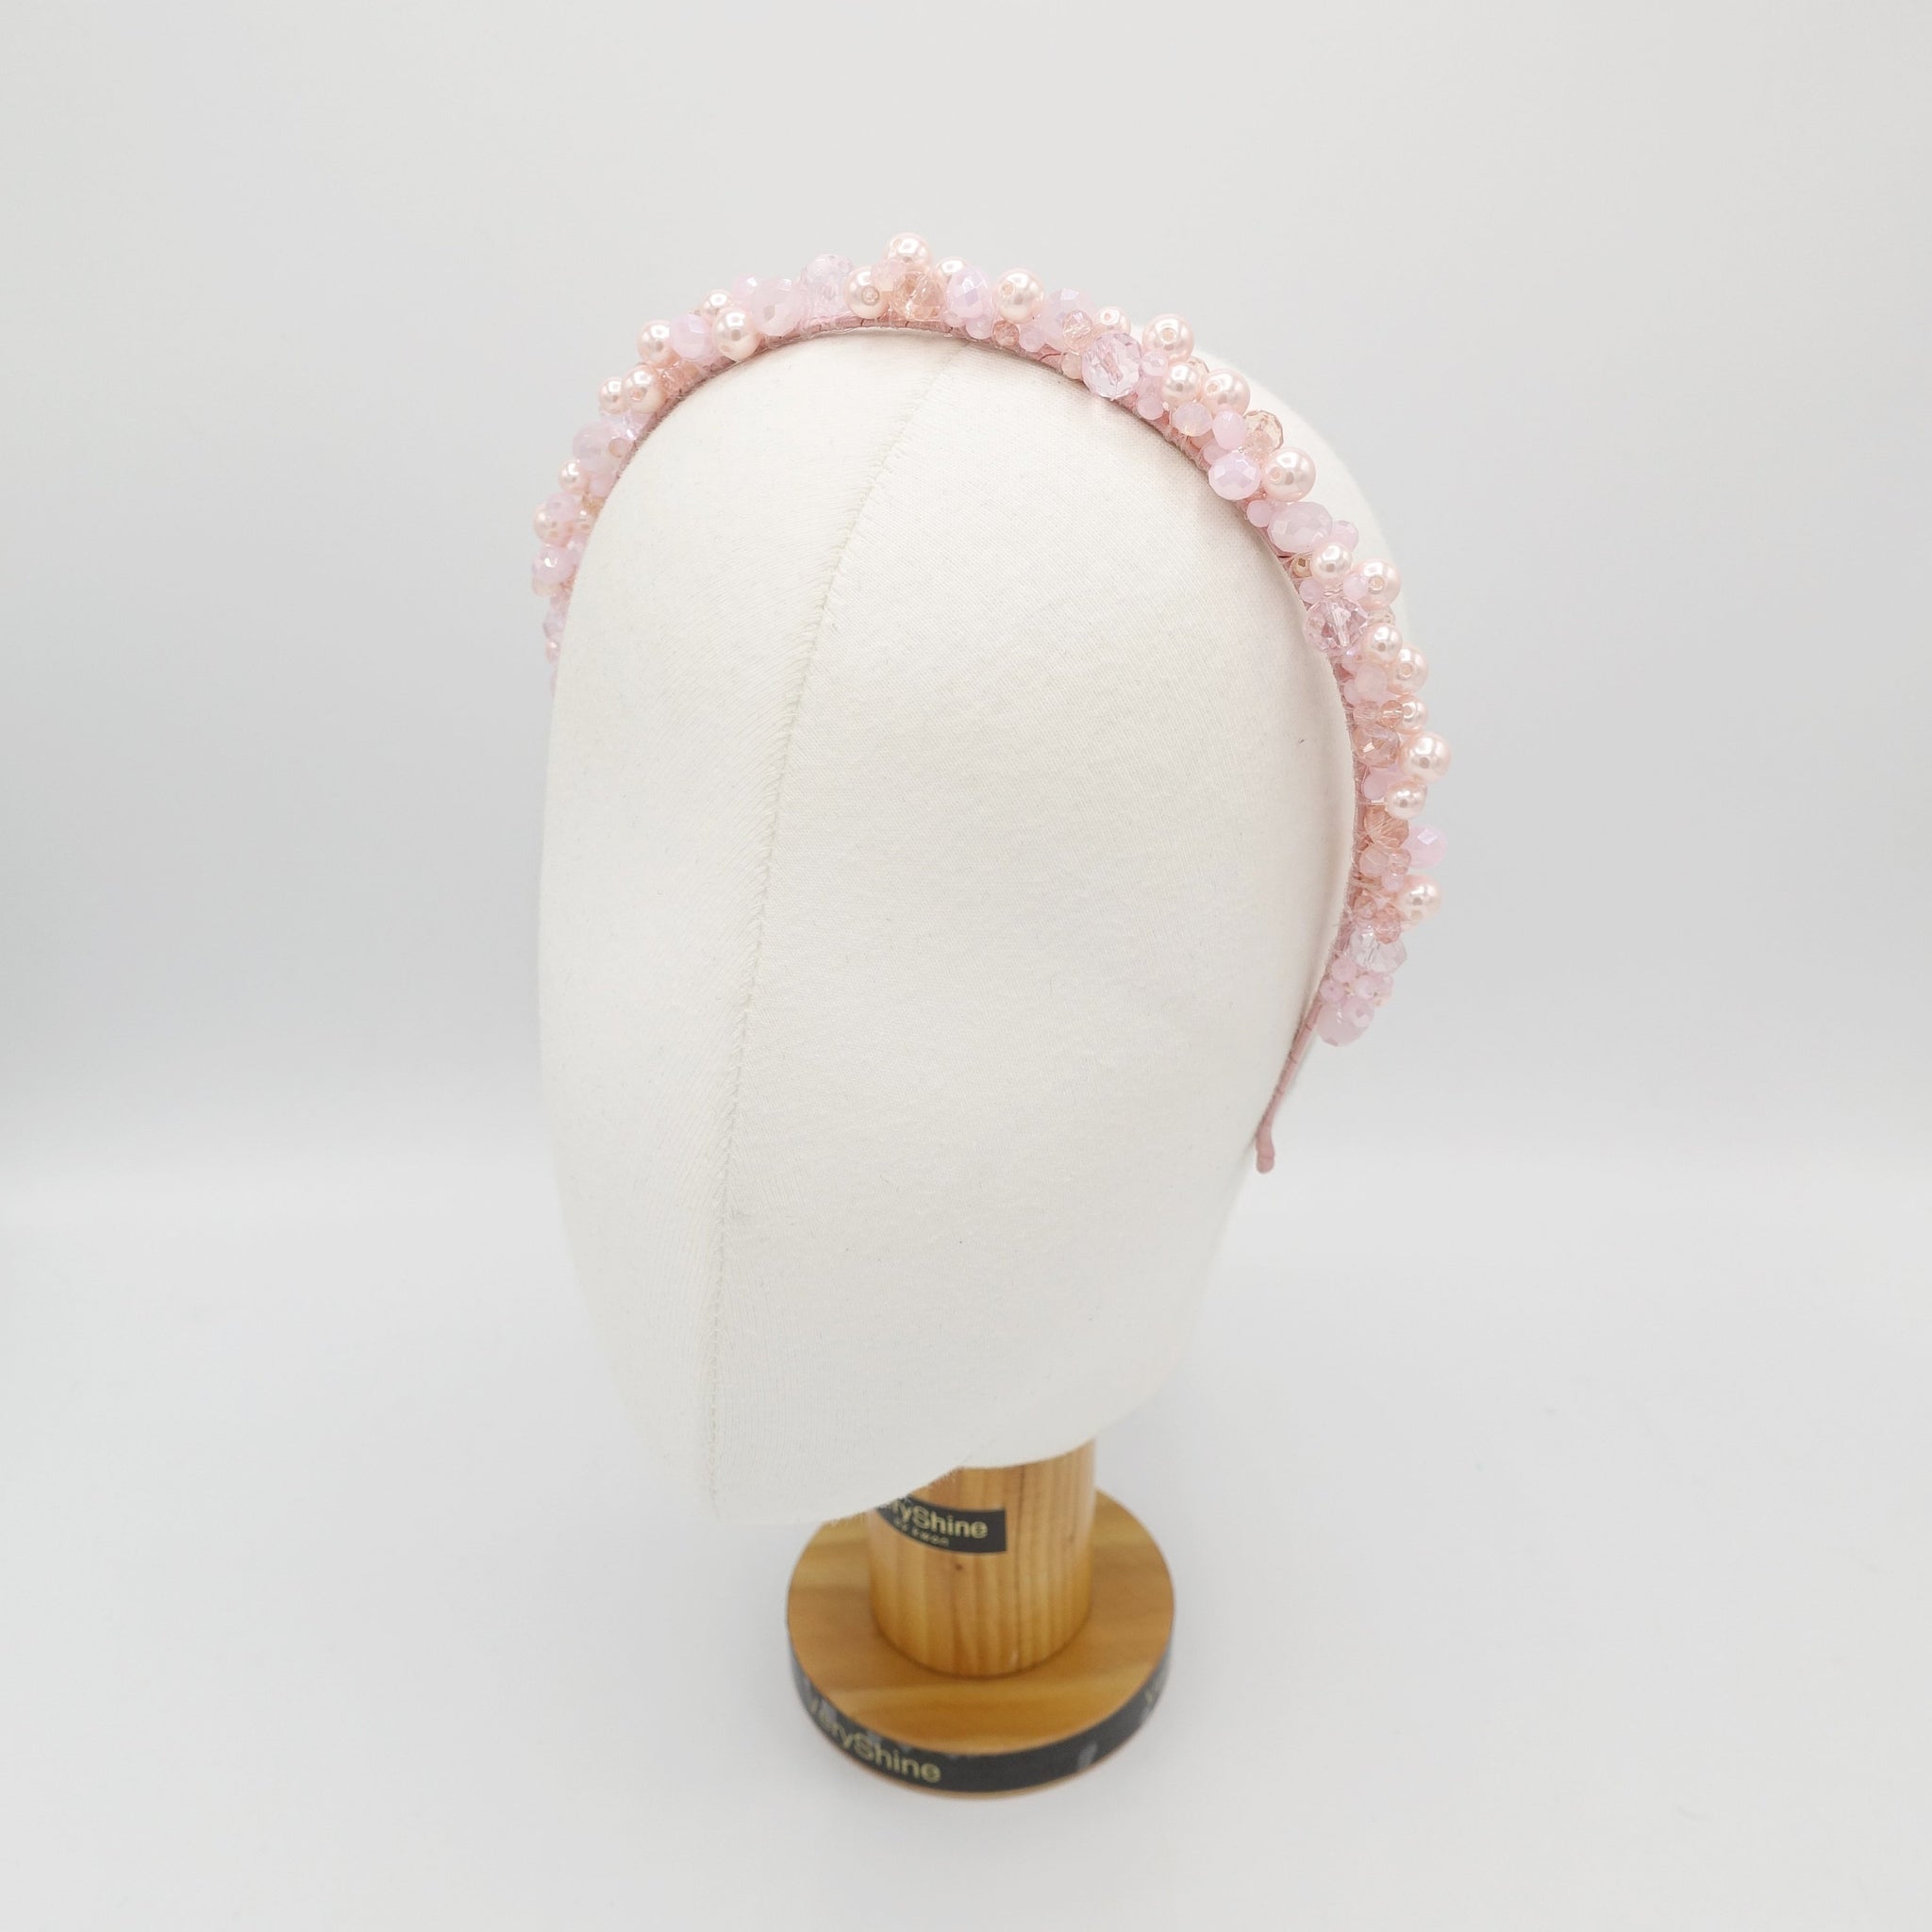 VeryShine Headband color pearl crystal ball beaded headband